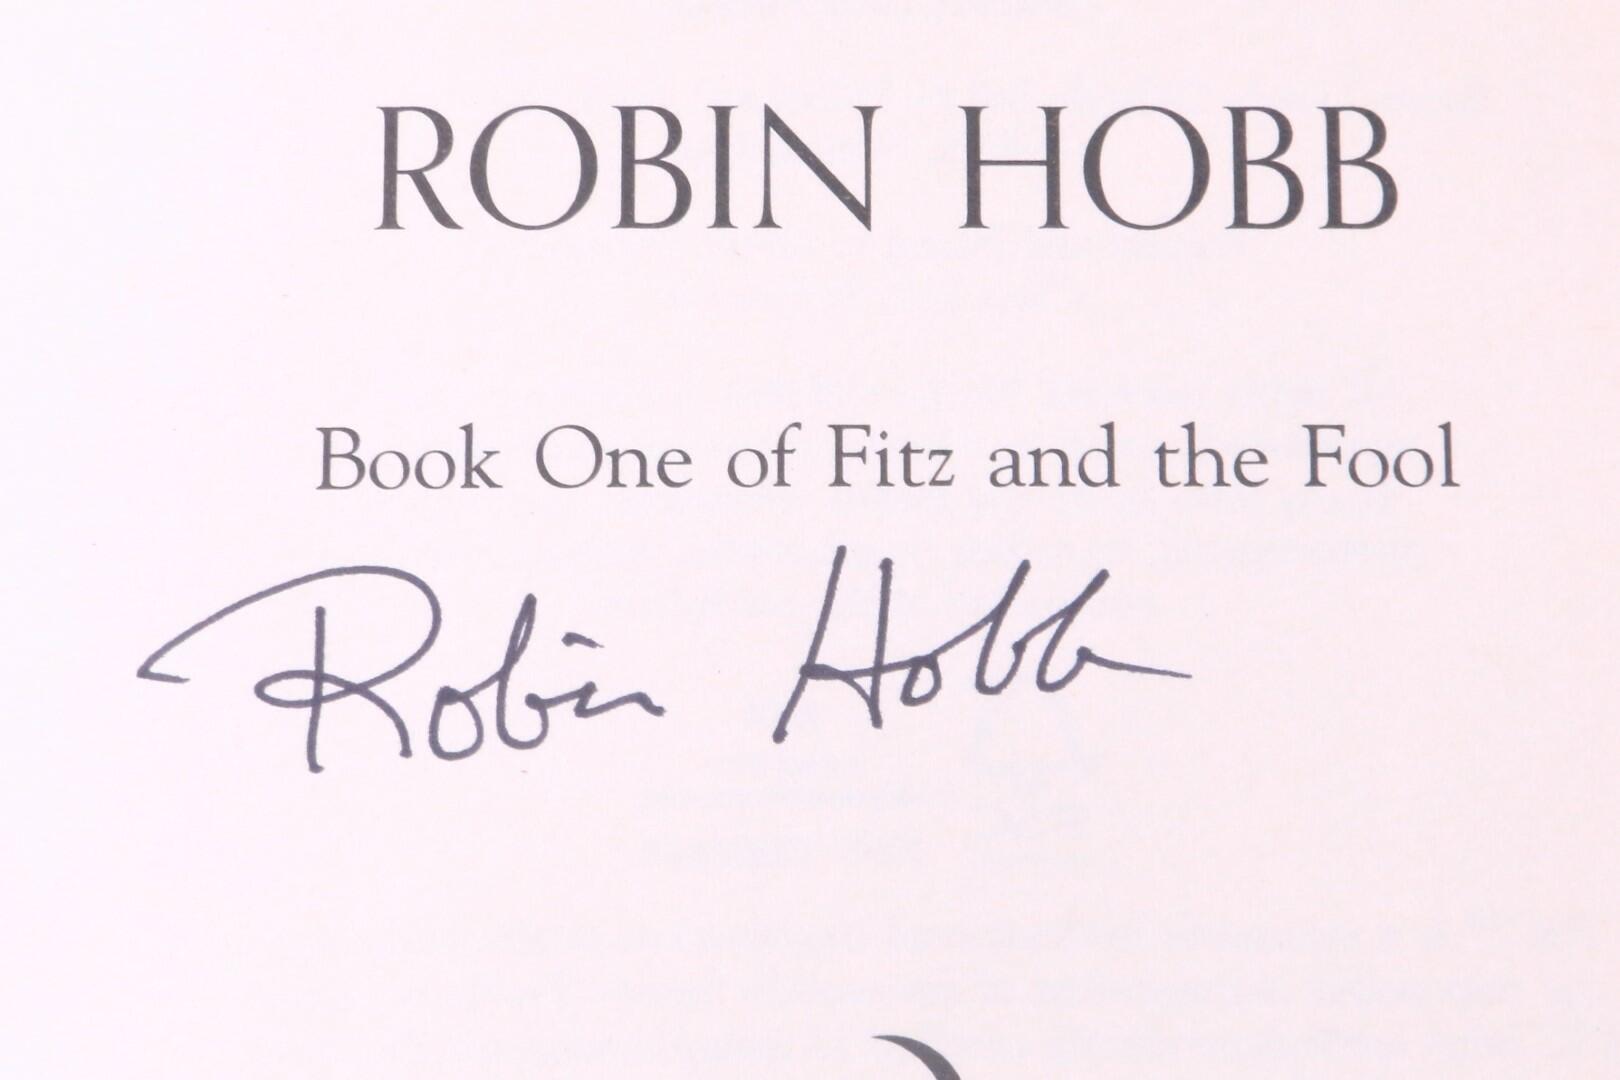 Robin Hobb - Fool's Assassin - Harper Voyager, 2014, Signed First Edition.